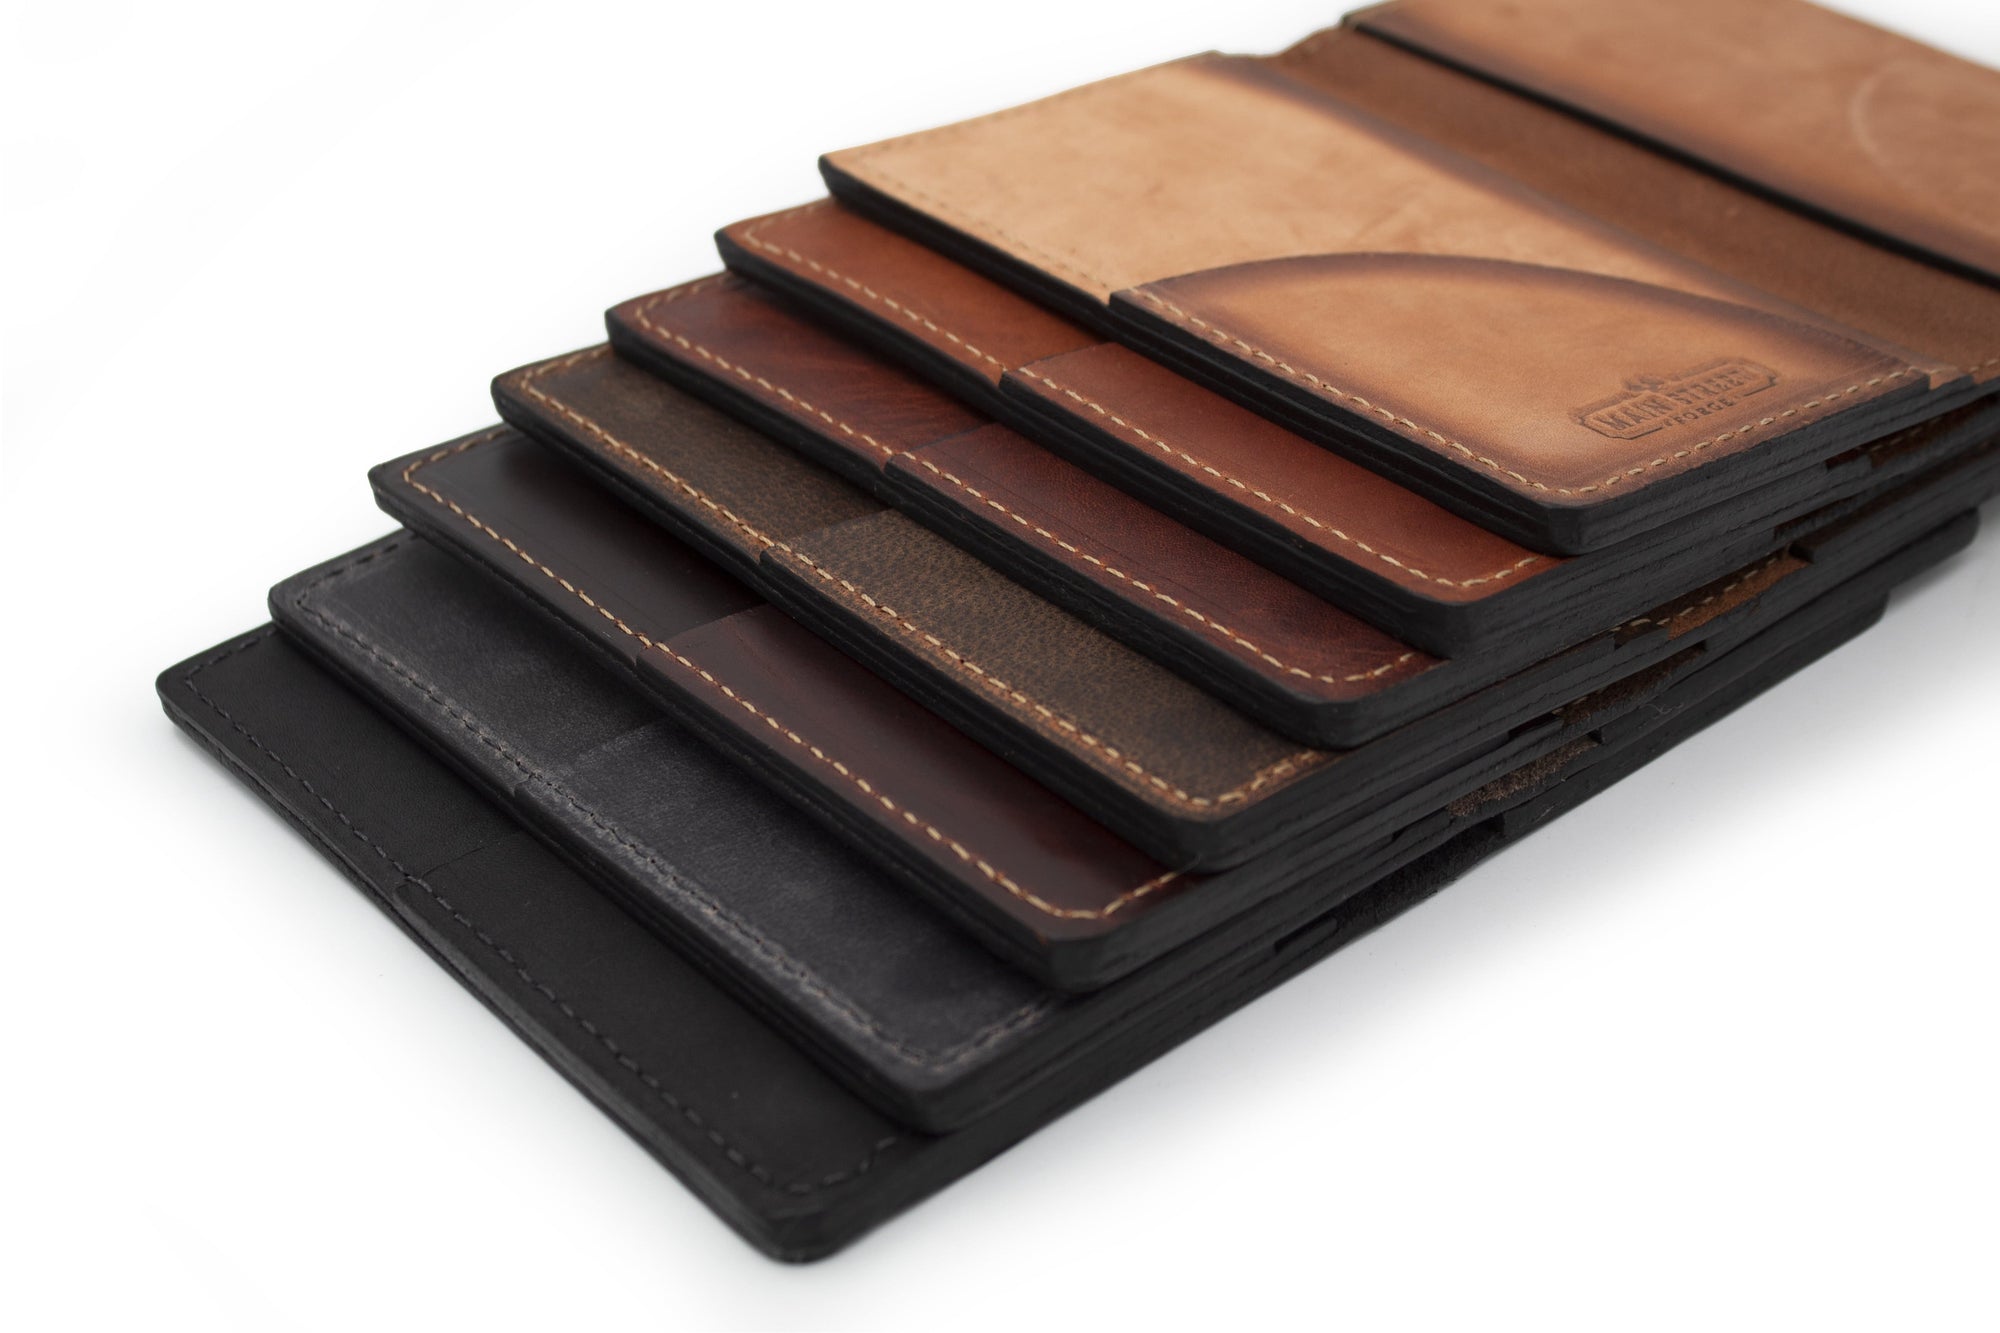 Double Passport Wallet - USA Made, Tan, Monogrammed, Full Grain Leather, Handmade by Mr. Lentz